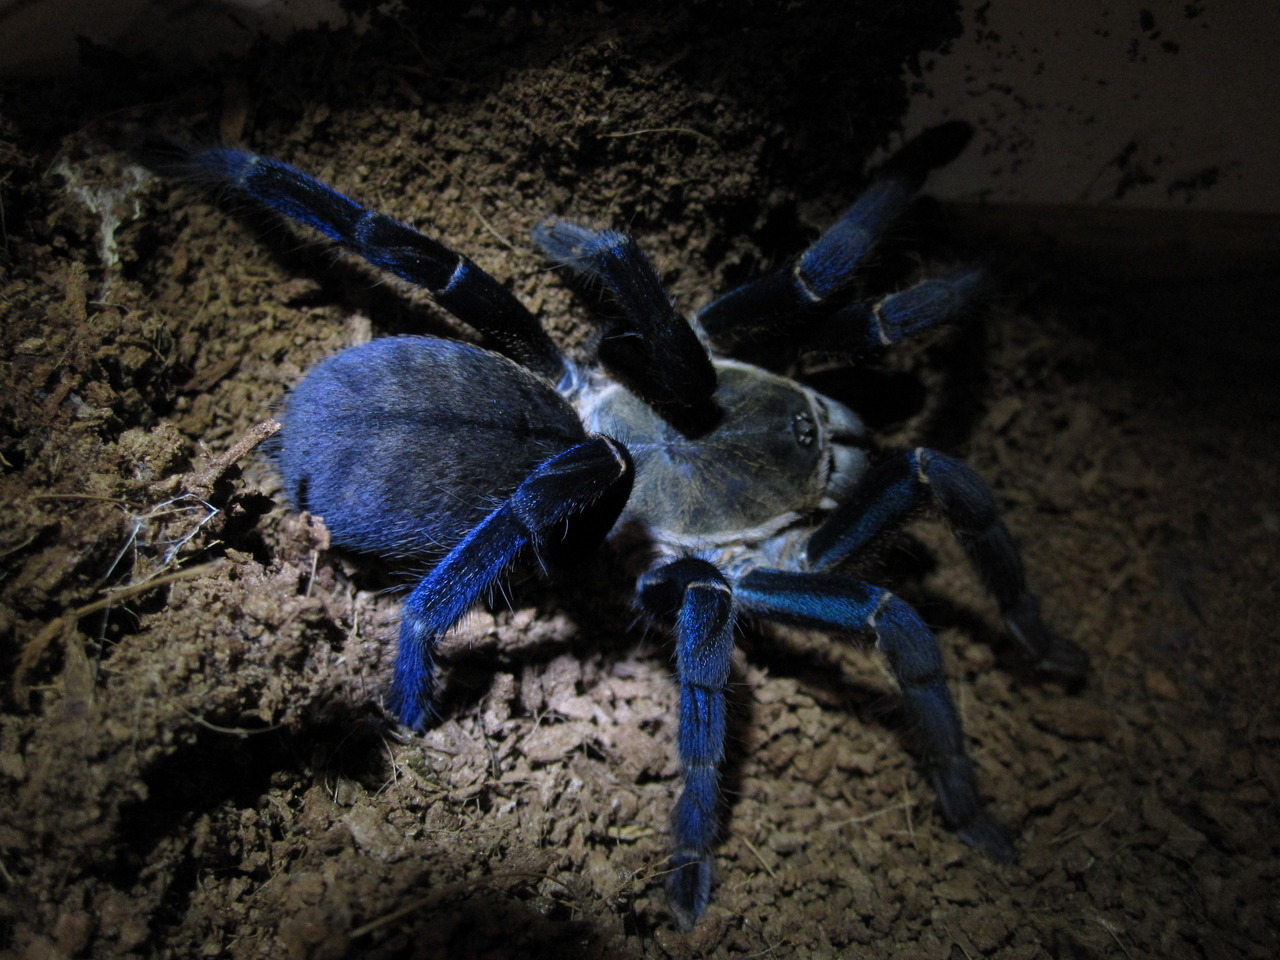 Cobalt Blue Tarantula
Haplopelma lividum
source:  Here